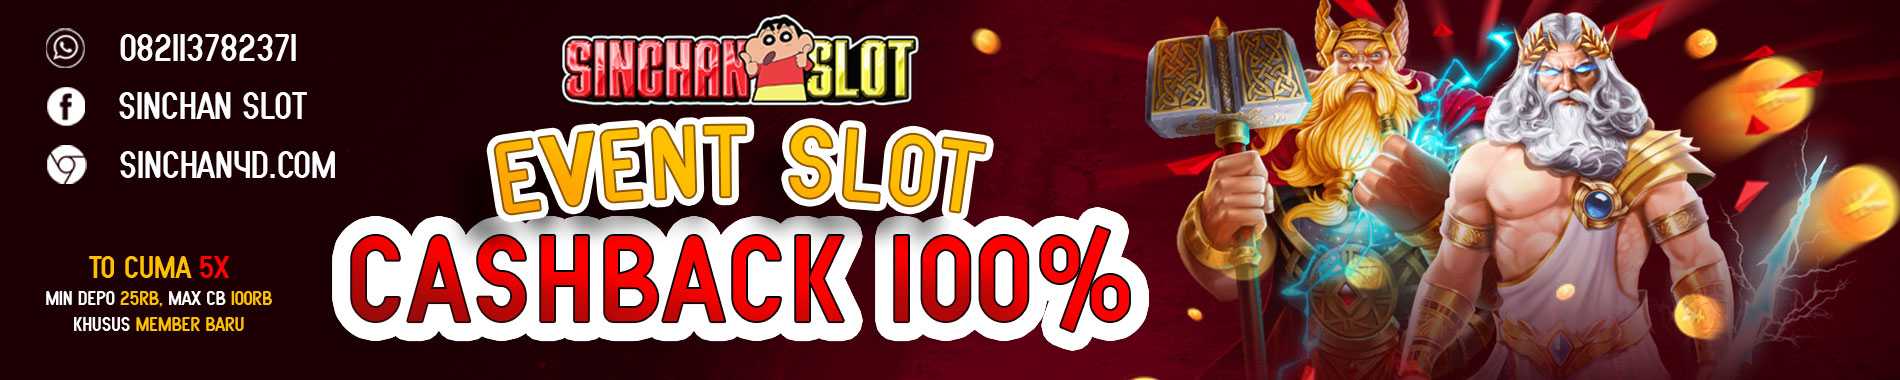 Bonus Cashback Slot 100%